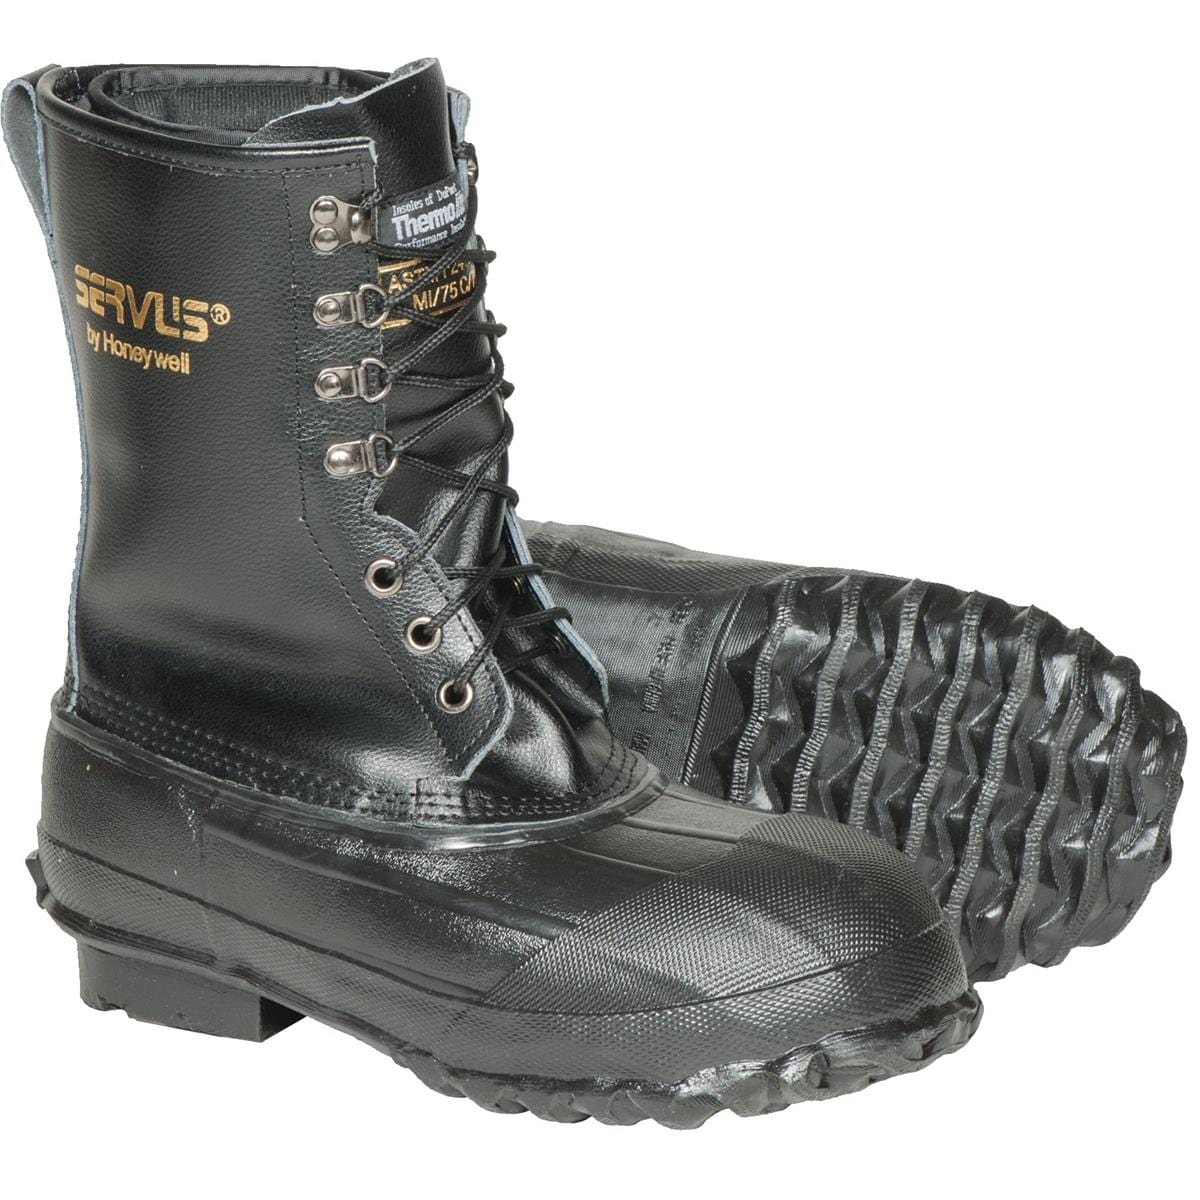 servus steel toe rubber boots